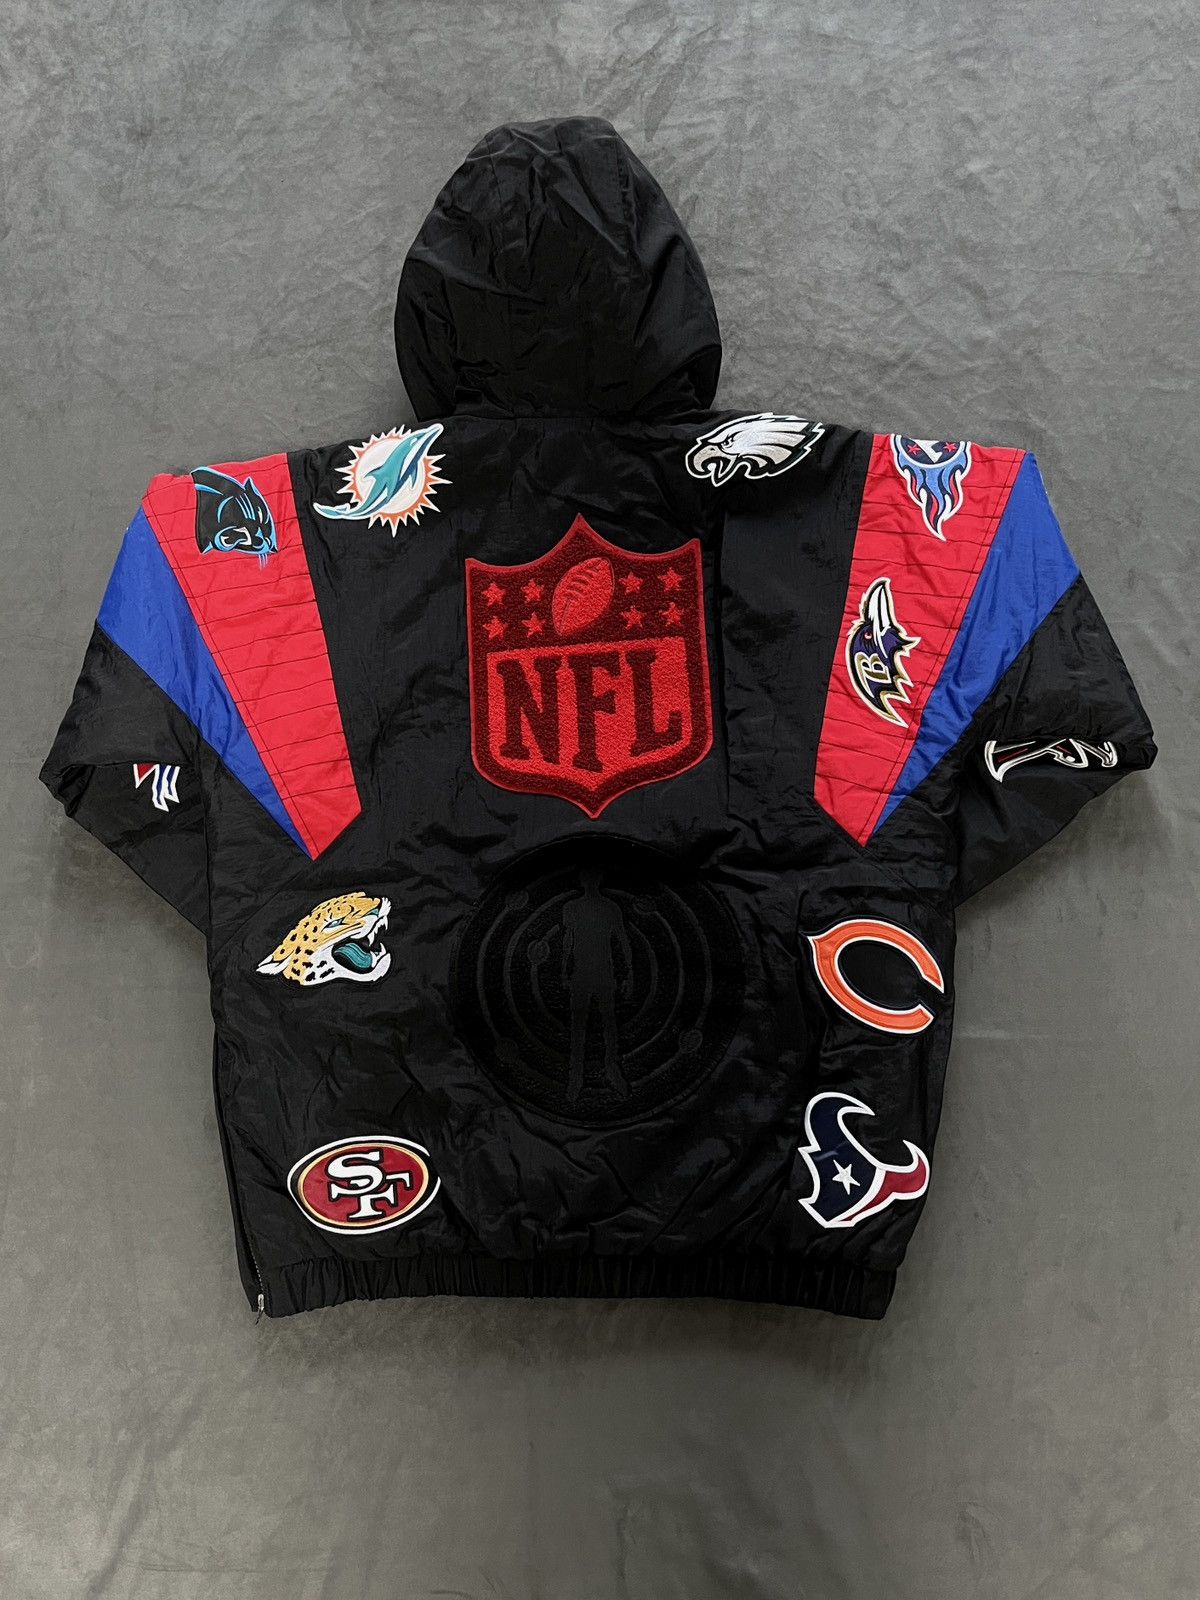 Rare Starter Kid Cudi NFL Draft LTD Breakaway Pullover Jacket - 11